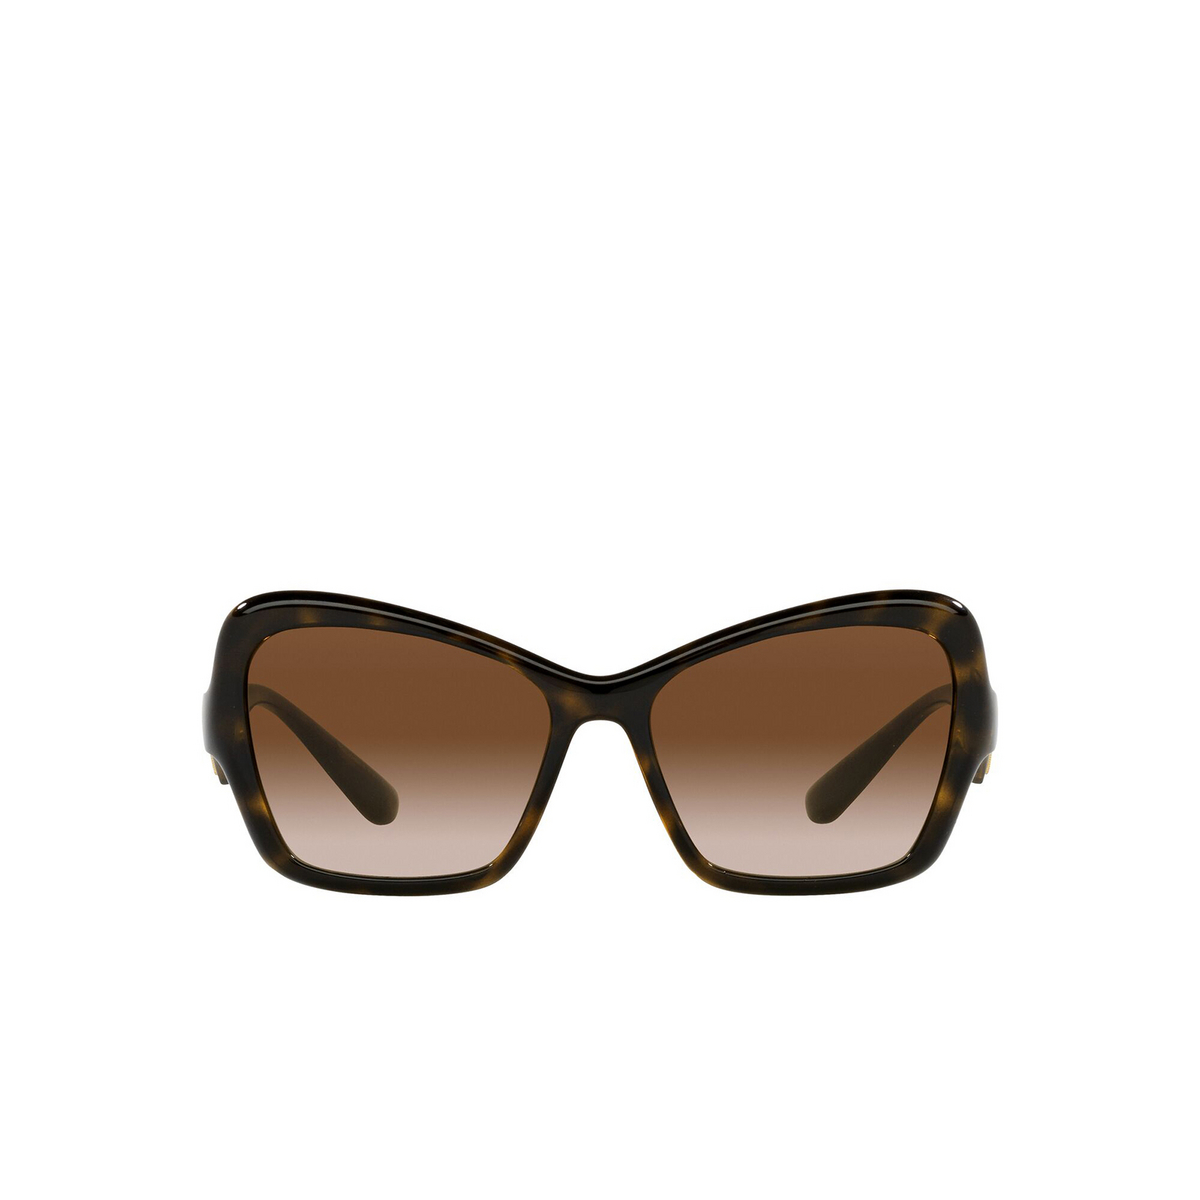 Dolce & Gabbana® Cat-eye Sunglasses: DG6153 color Havana 502/13 - front view.